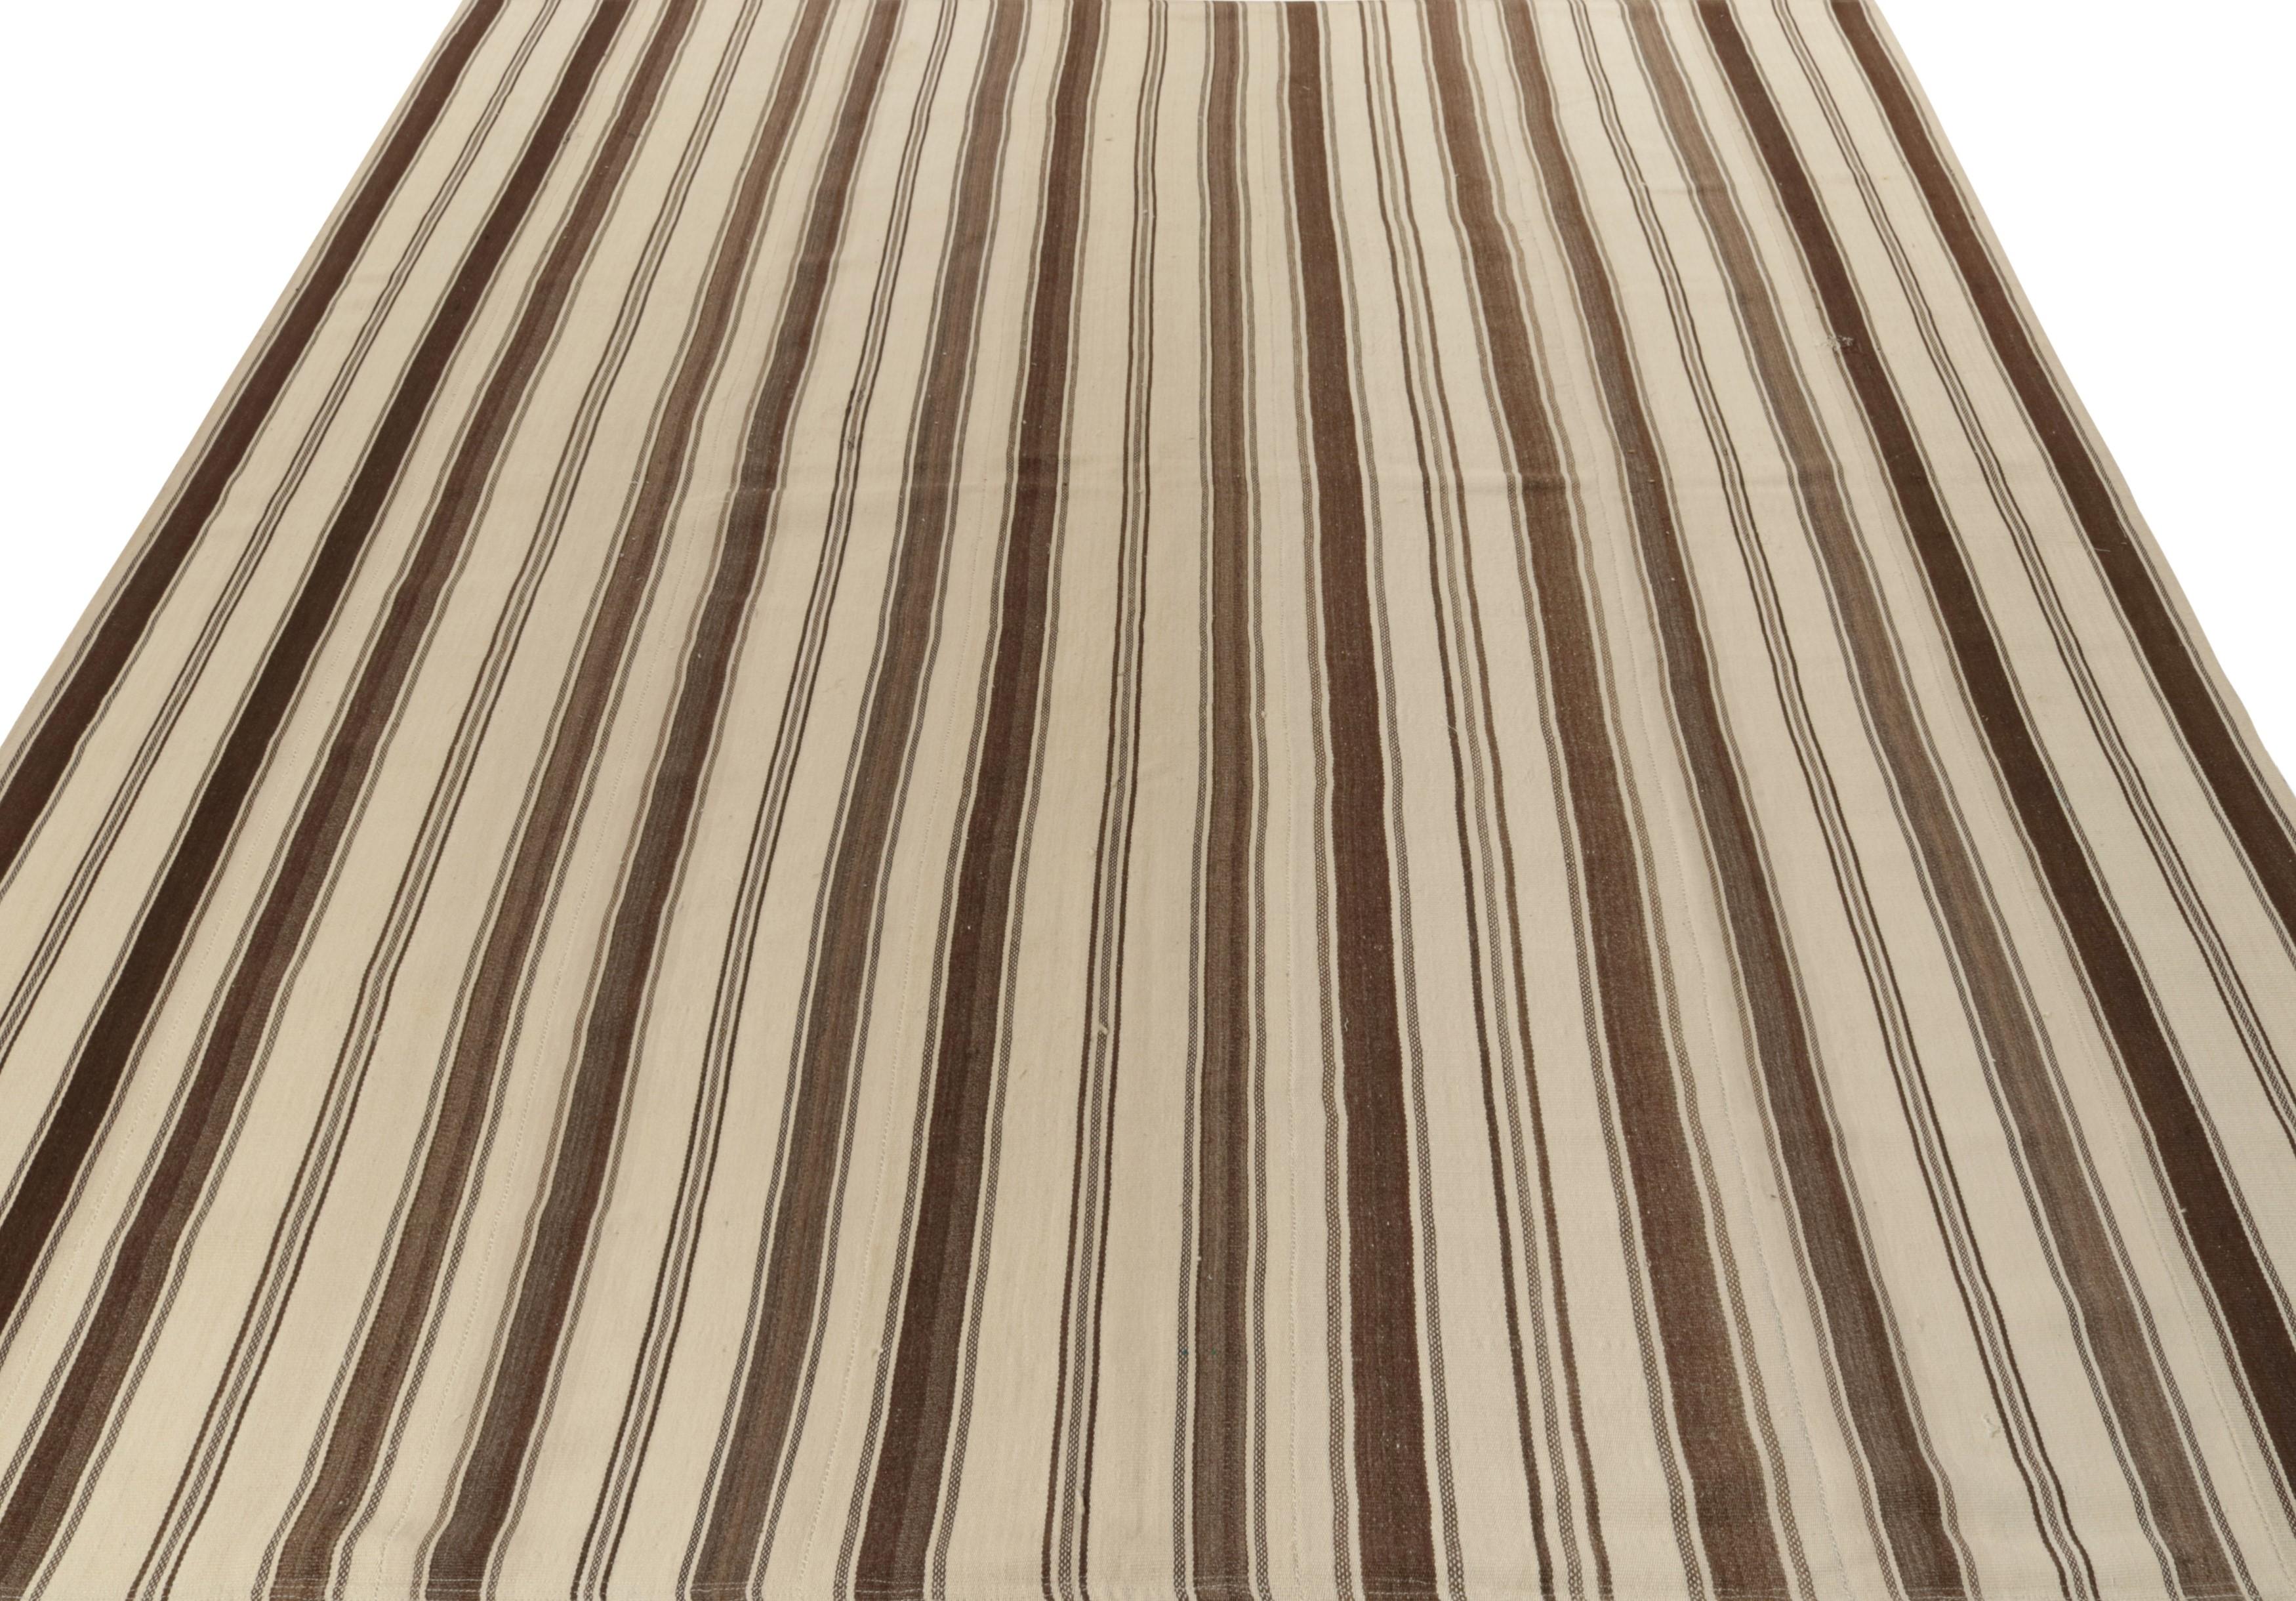 Turkish Vintage Kilim Rug in Beige, Brown Paneled Style, Striped Pattern by Rug & Kilim For Sale